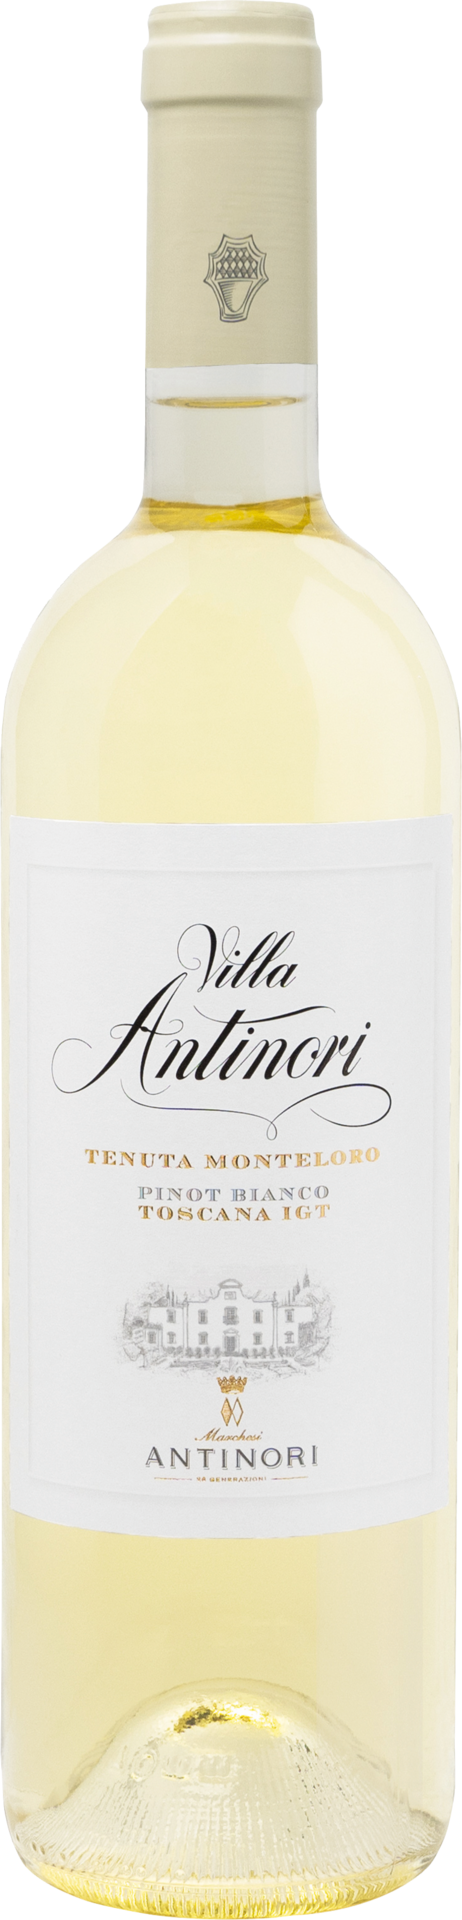 Pinot Bianco Toscana IGT